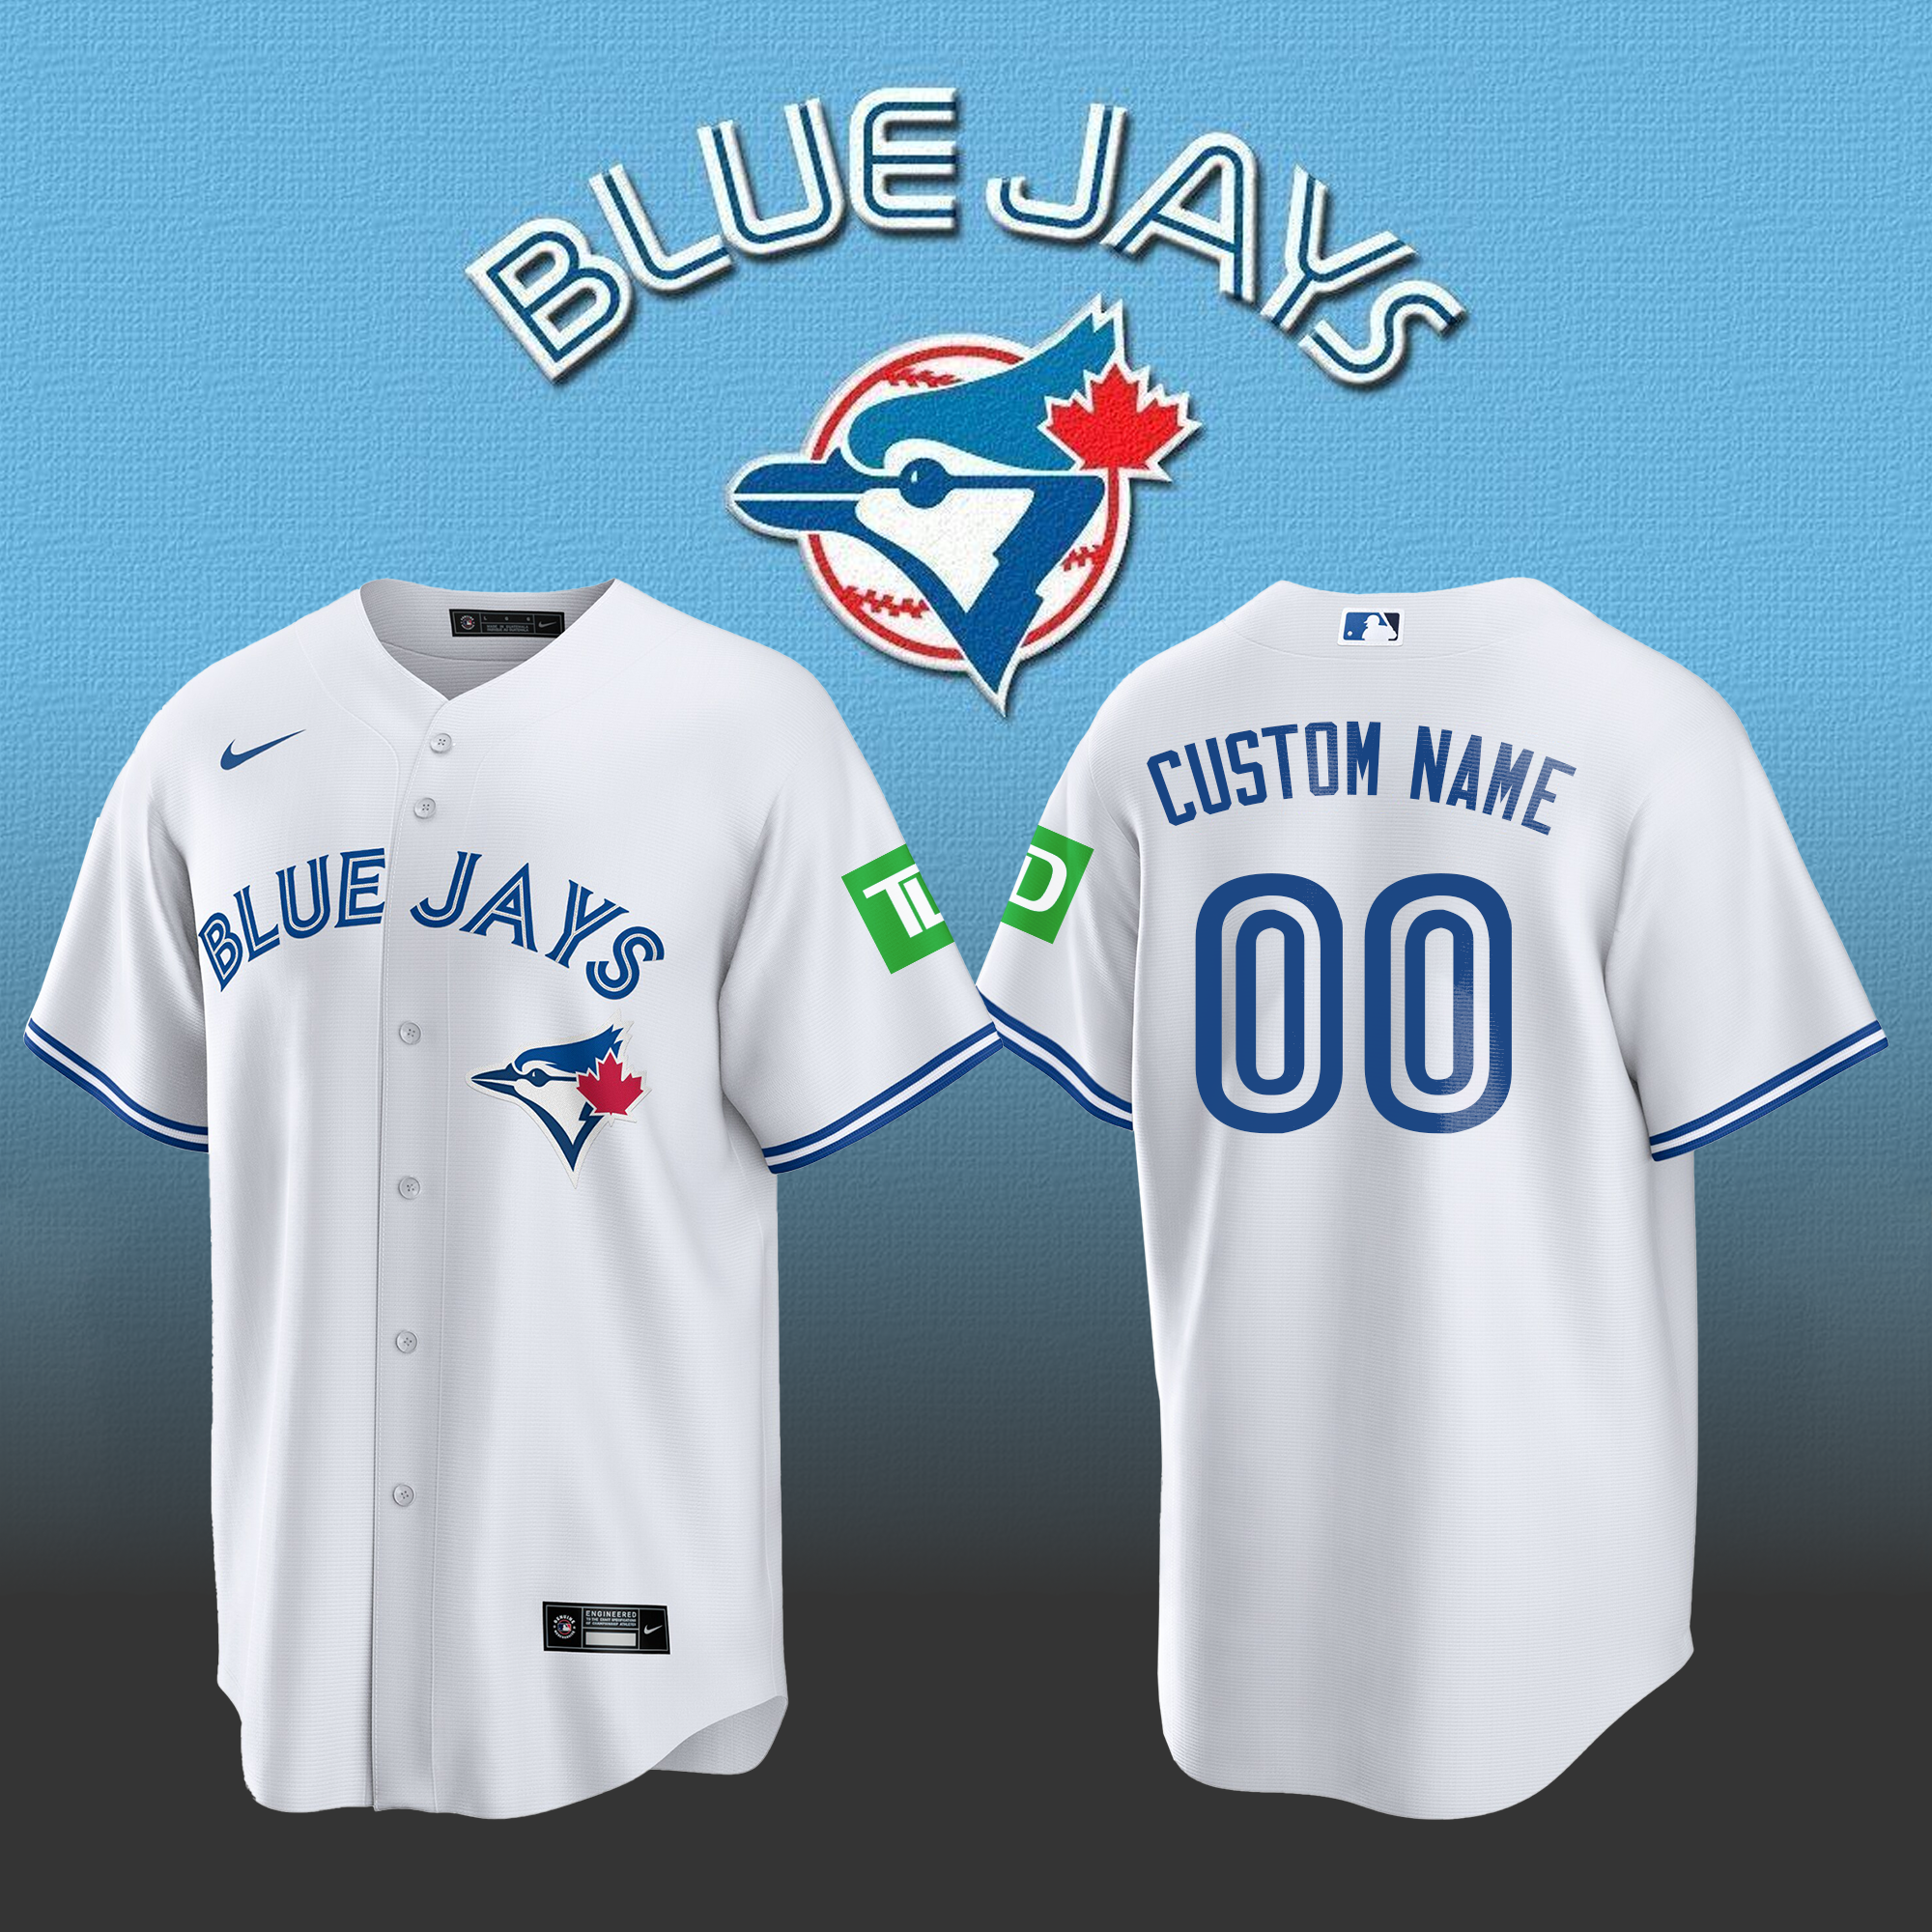 Cheap Toronto Blue Jays Apparel, Discount Blue Jays Gear, MLB Blue